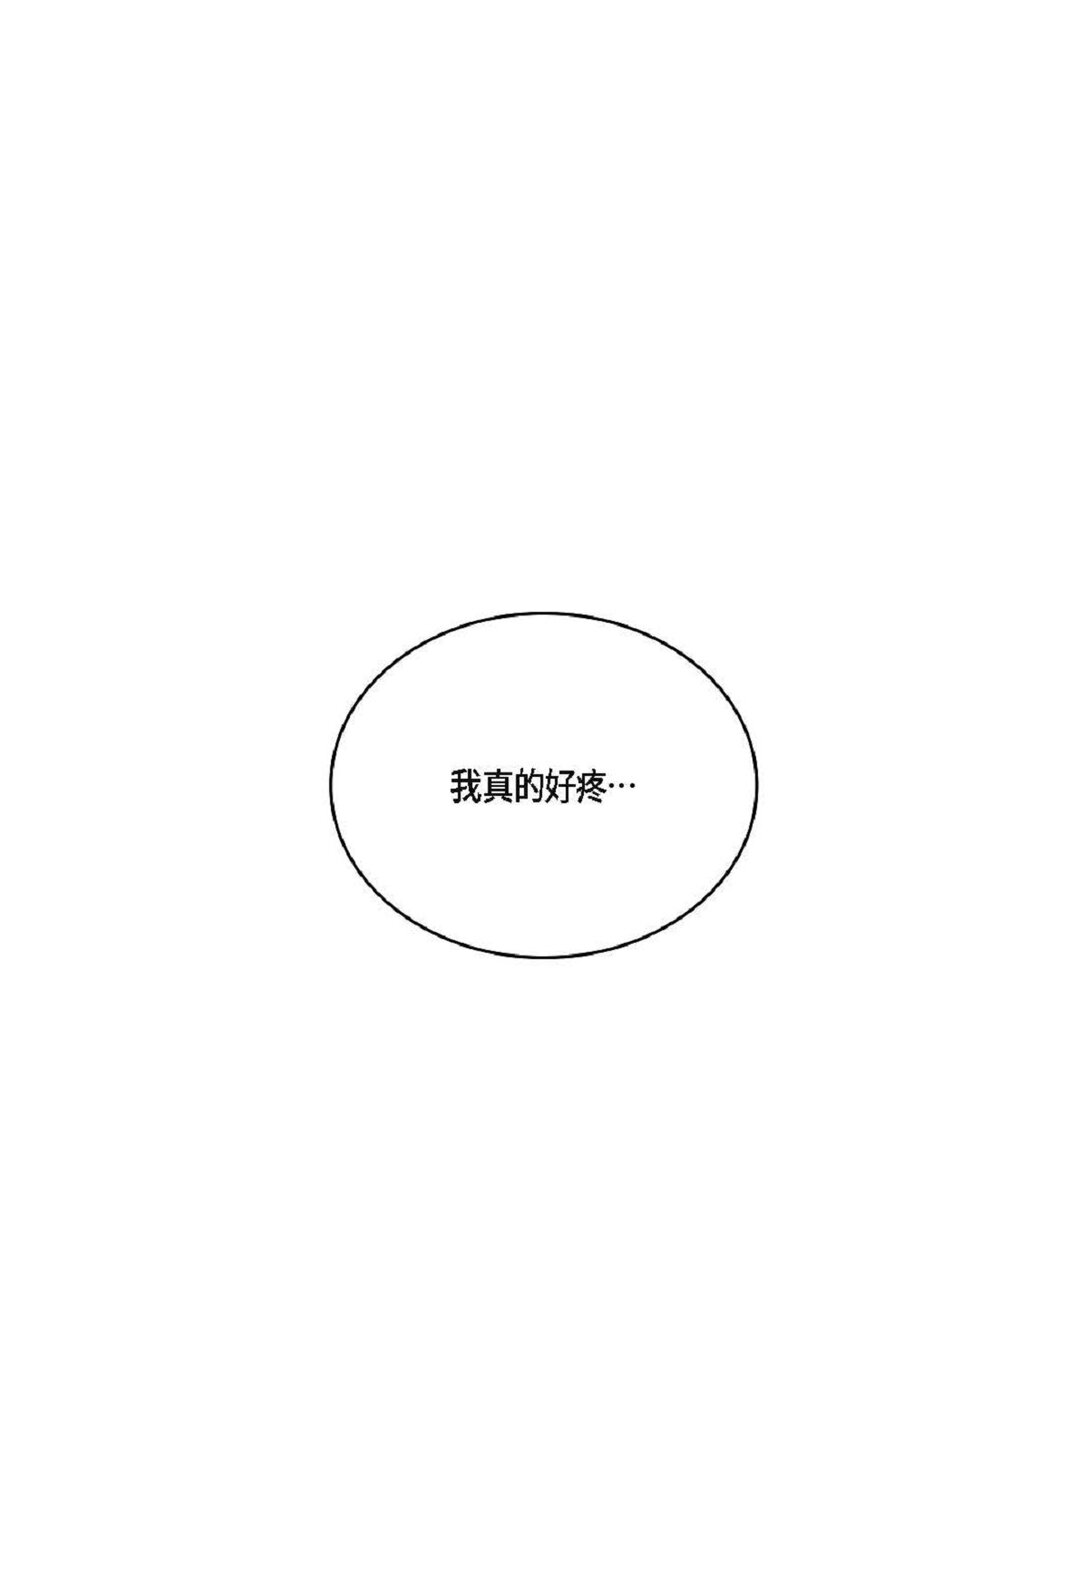 日常多情事 - 92 ep.92(2/2) - 5